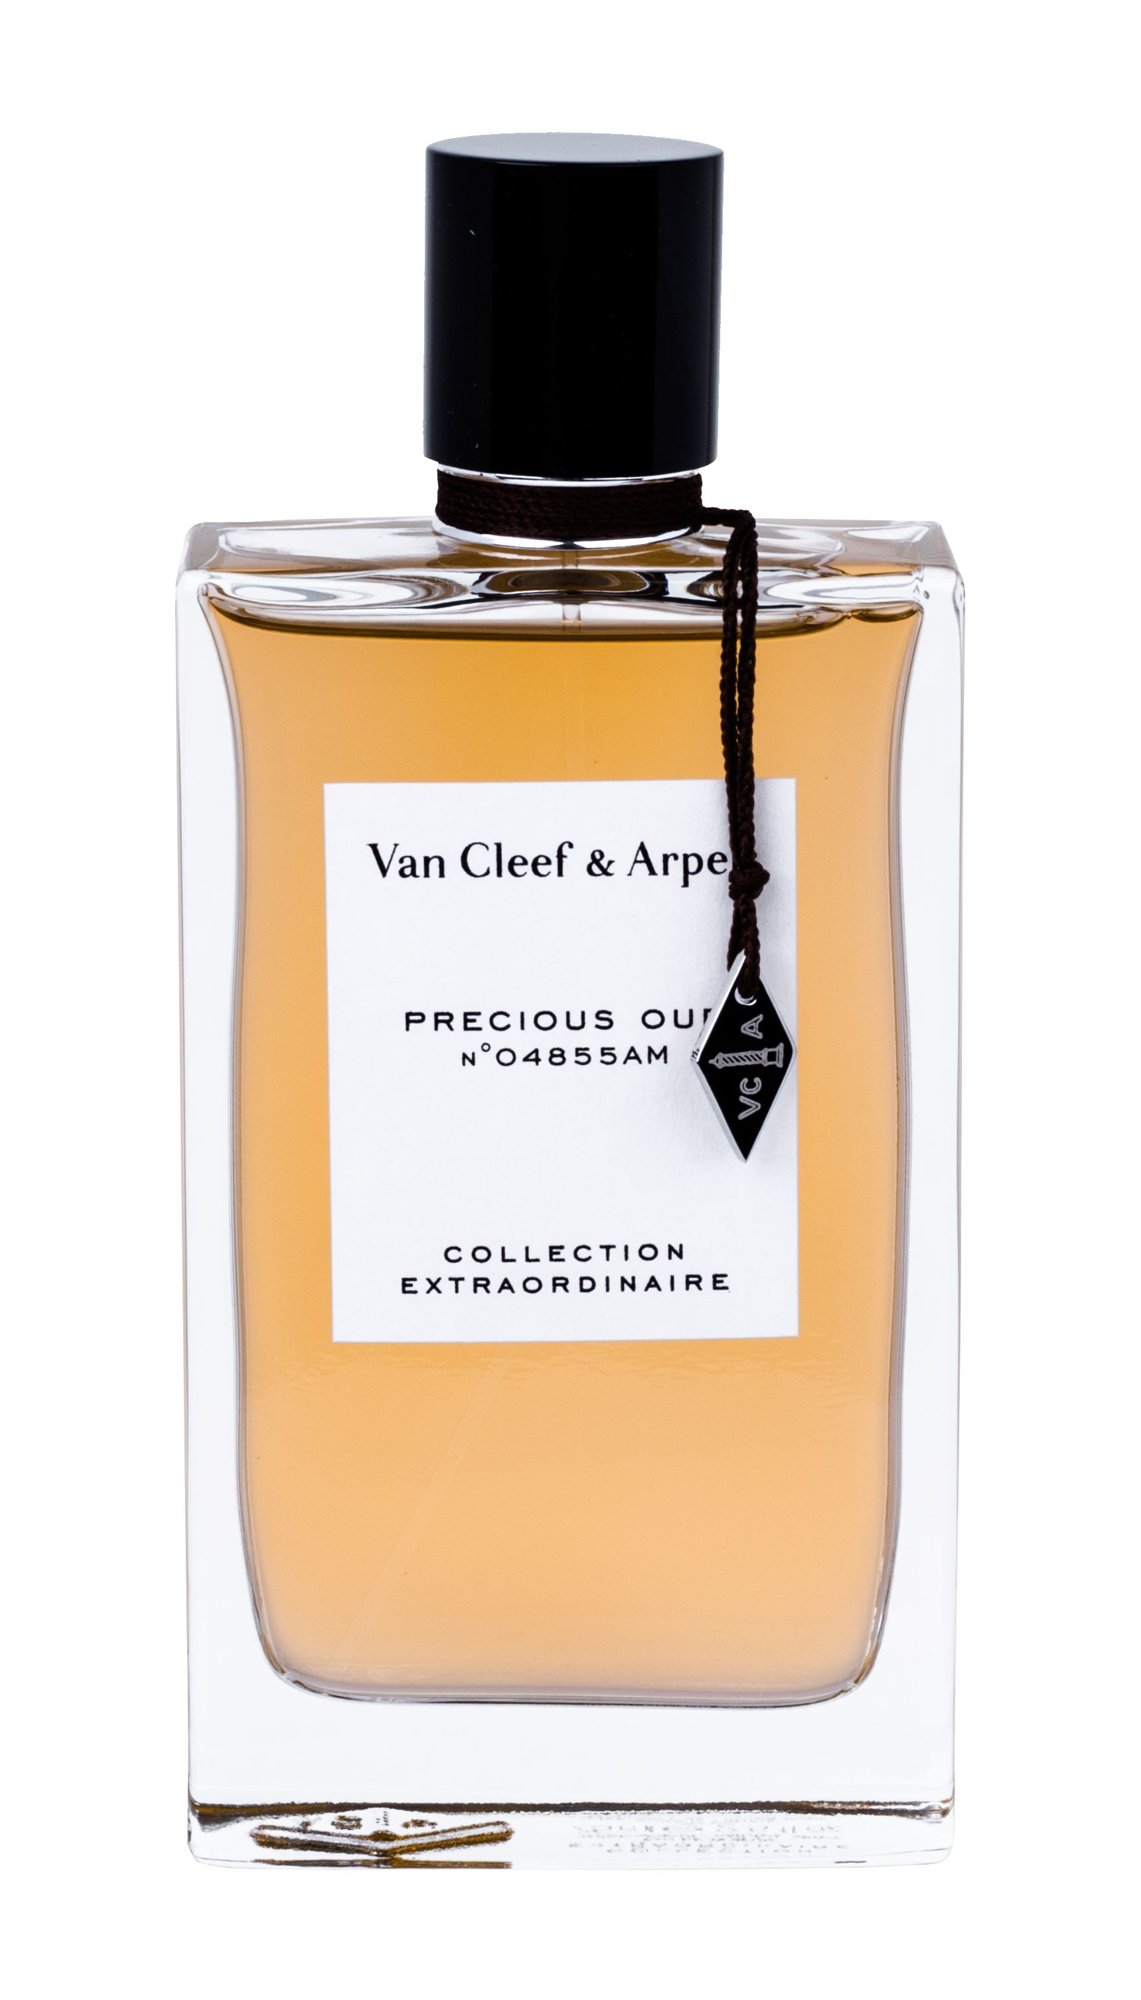 Van Cleef & Arpels Collection Extraordinaire Precious Oud